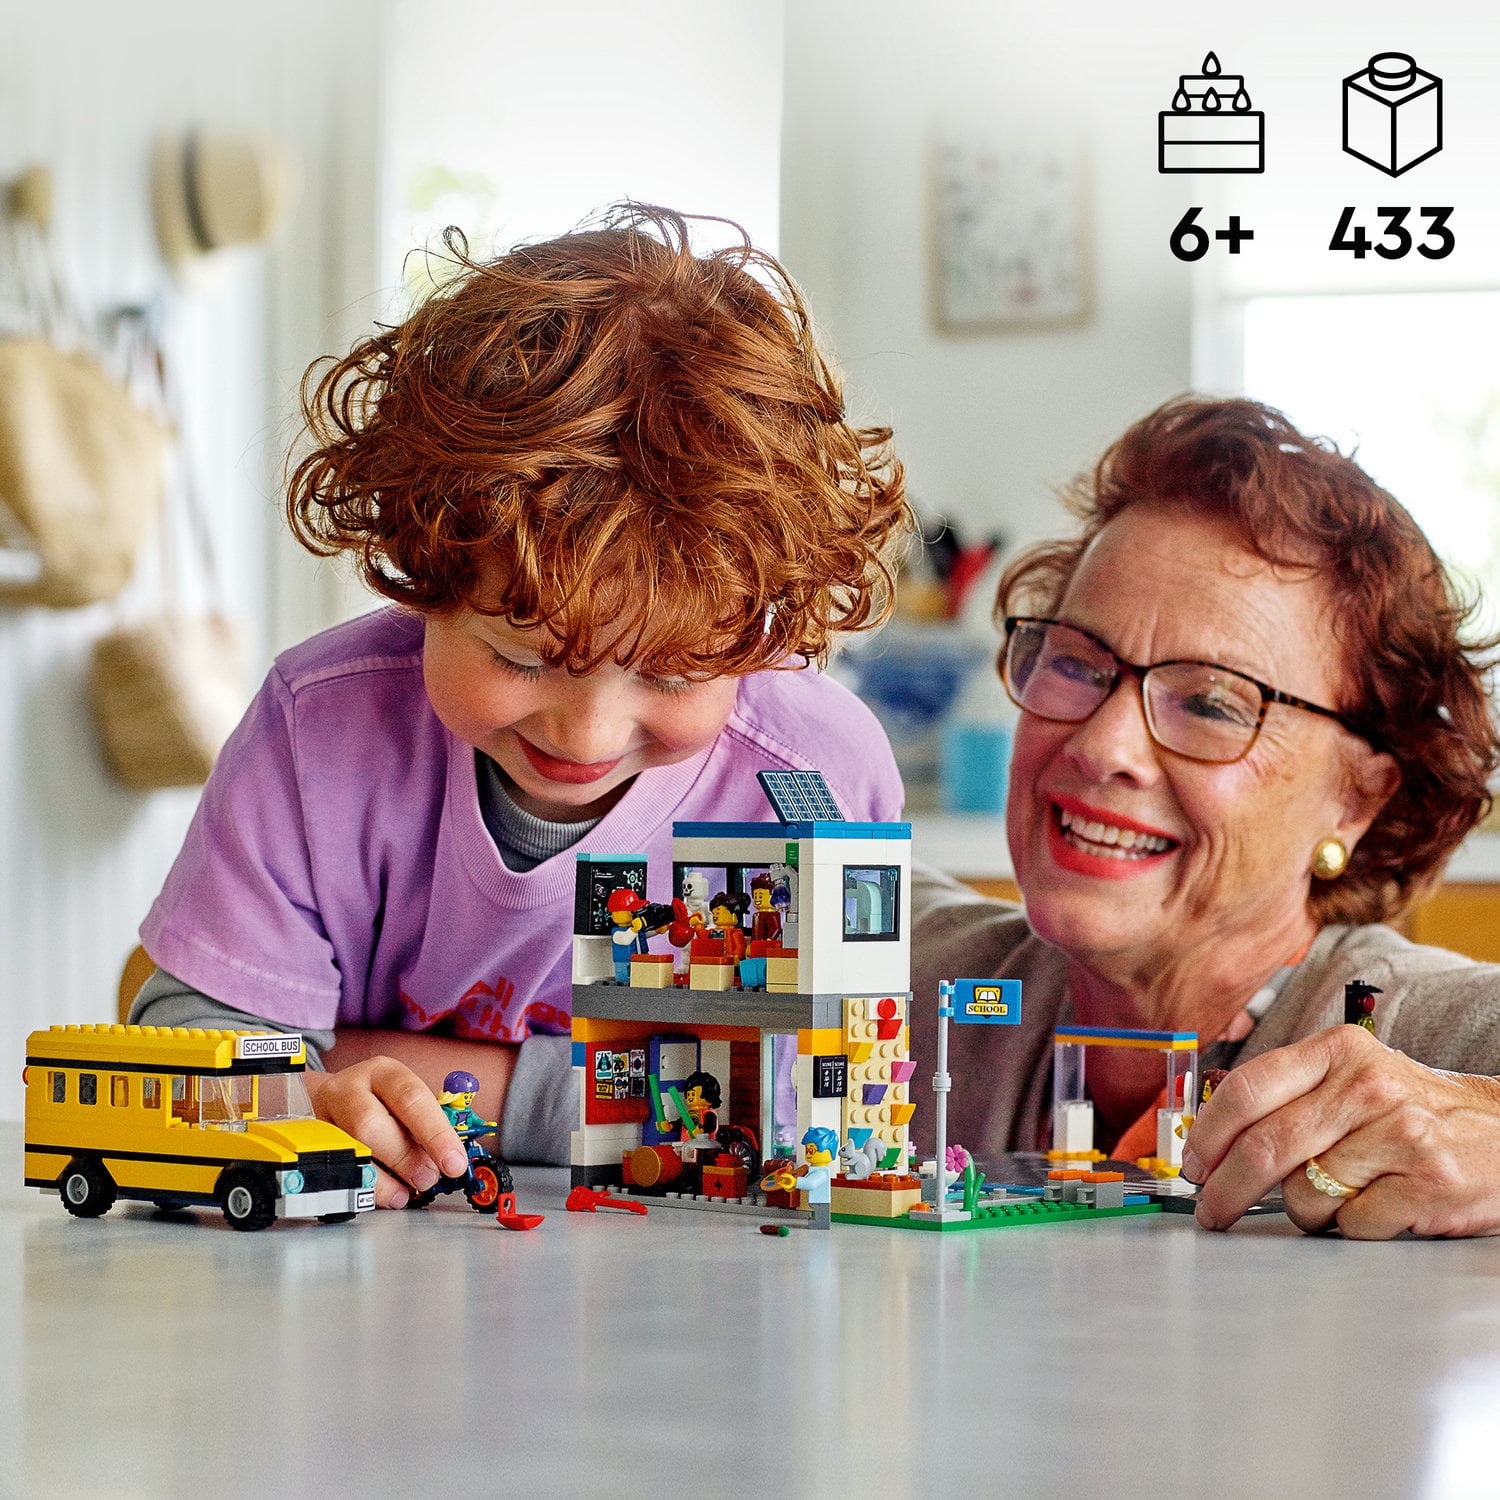 Governable Lav Landmand LEGO School Day 60329 Building Set (433 Pieces) - Walmart.com